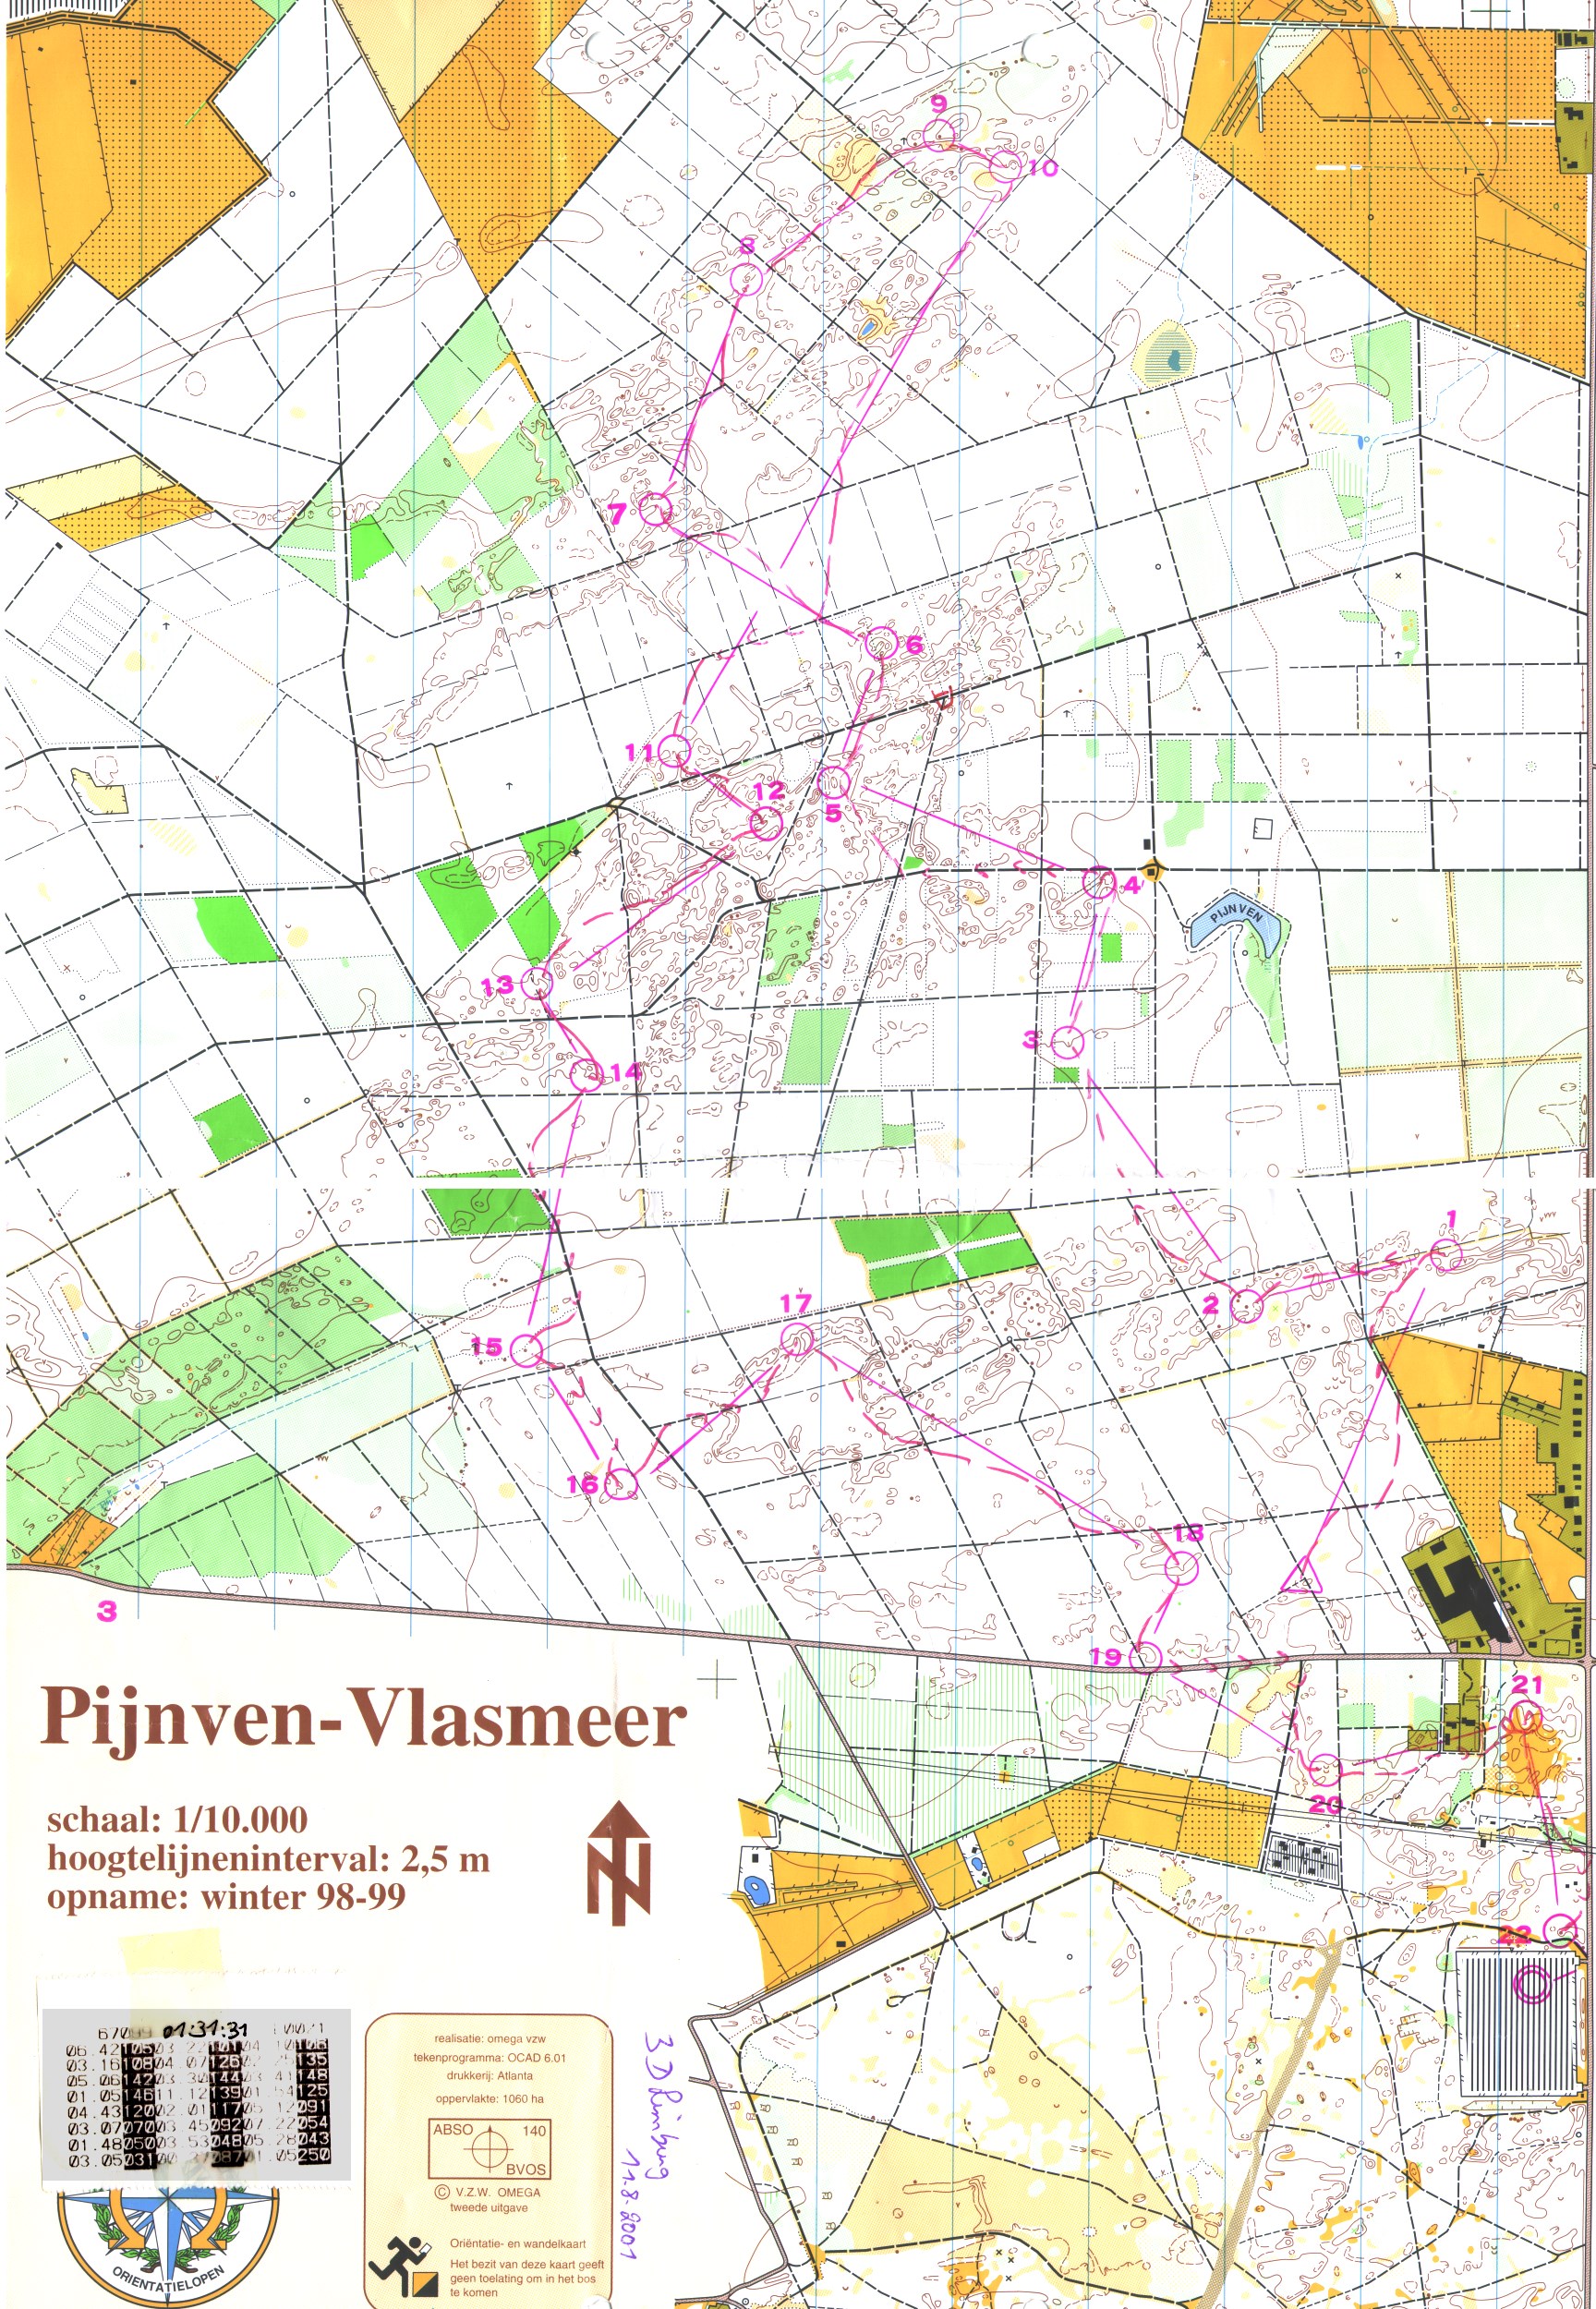 3 Daagse van Limburg (2001-08-11)